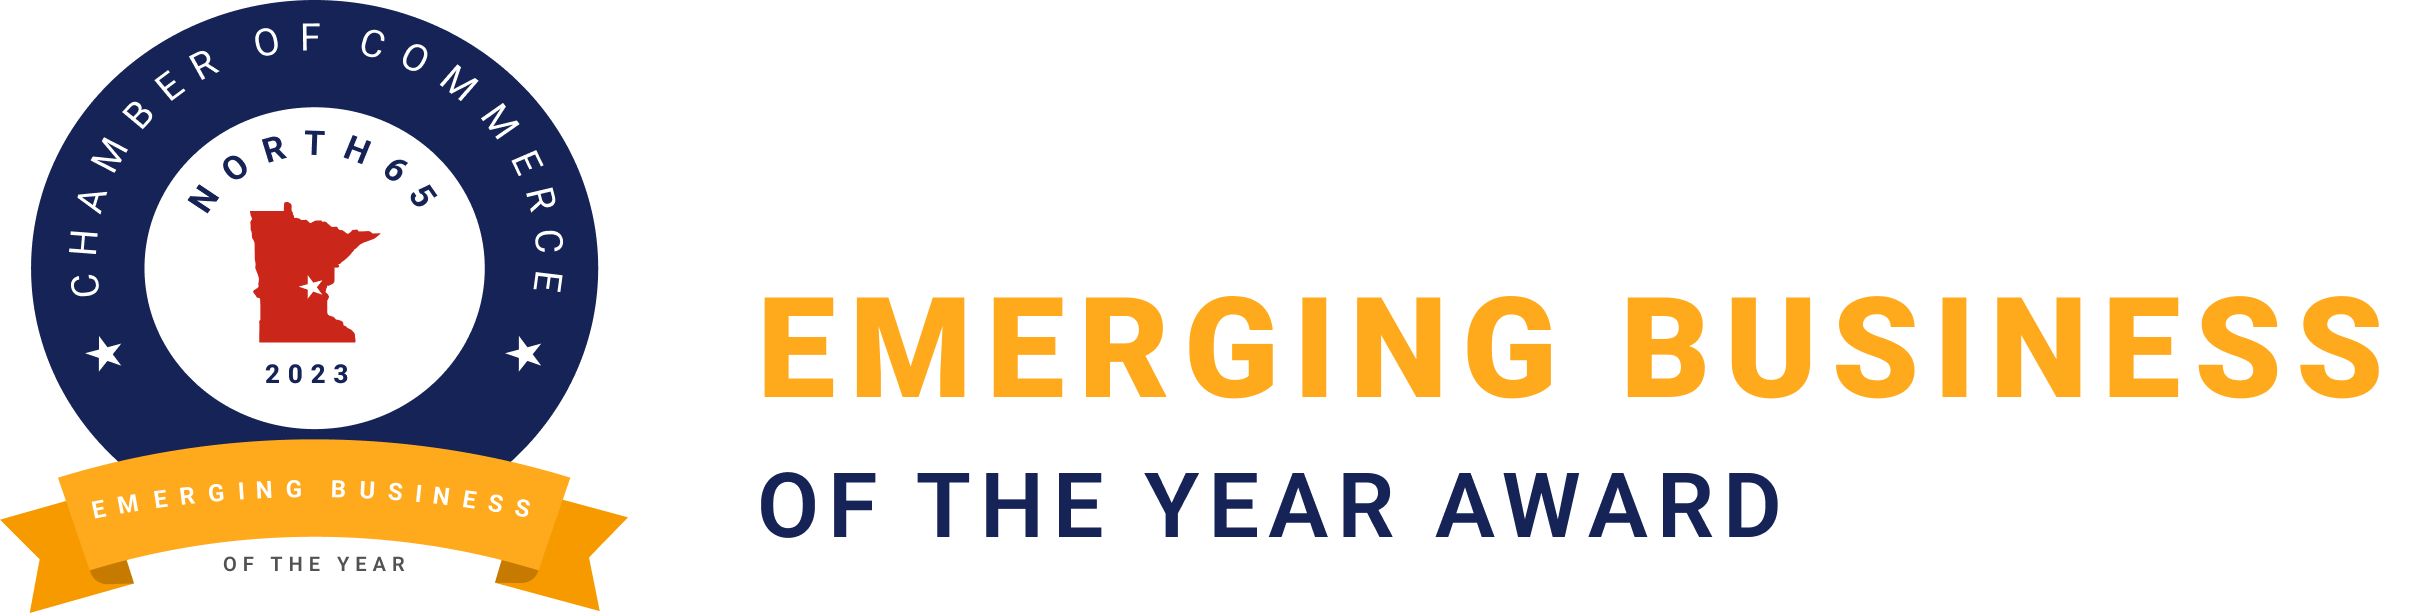 Emerging Business Award 2023 Header Group PNG